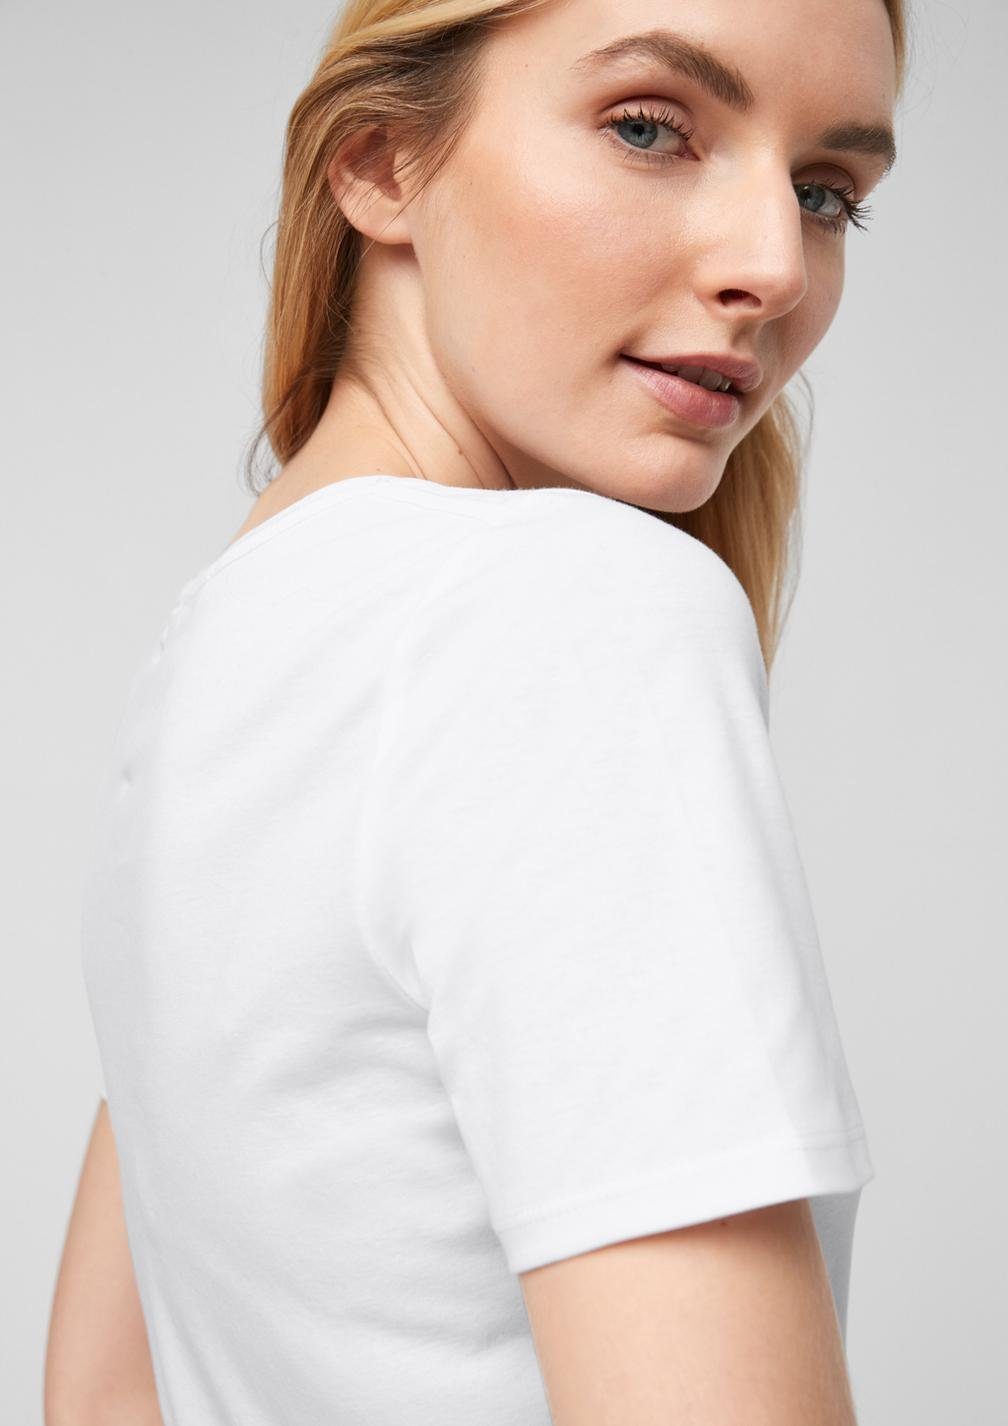 Qualität, Basic 2 Weiß Slim Stück Fit, Single-Jersey s.Oliver T-Shirt aus softer